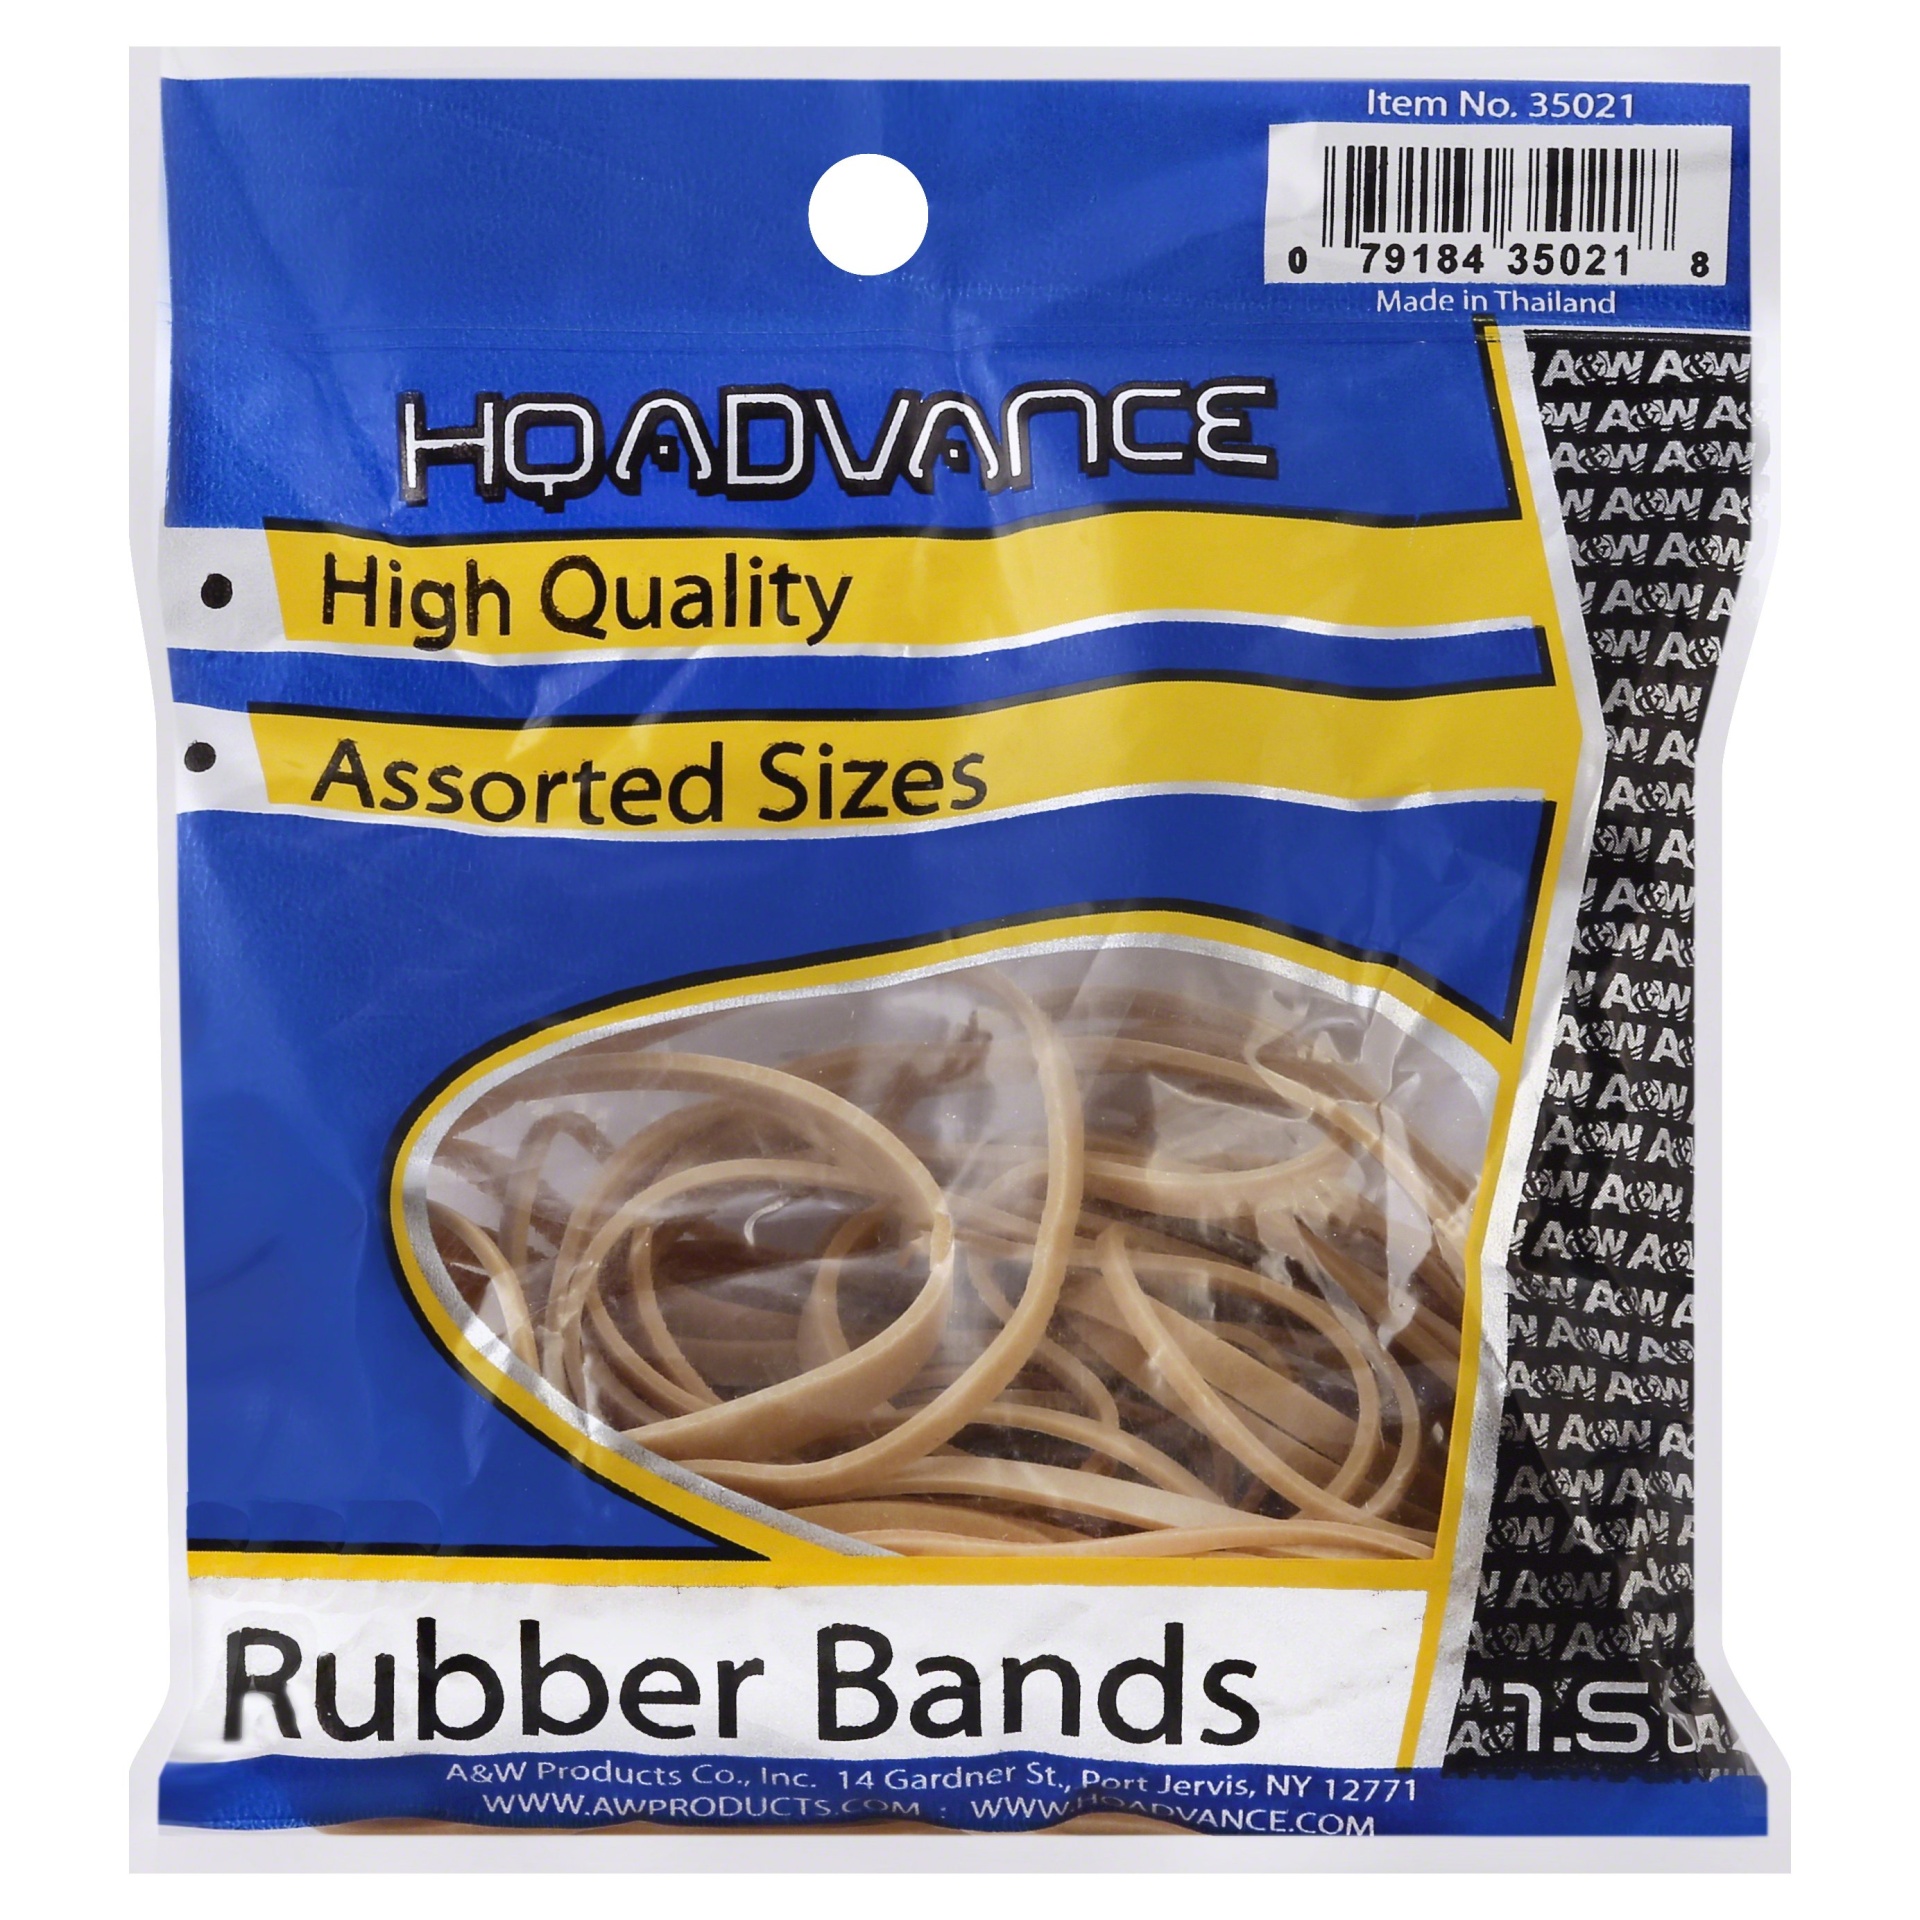 slide 1 of 2, HQ Advance Rubber Bands 1.5 oz, 1.5 oz